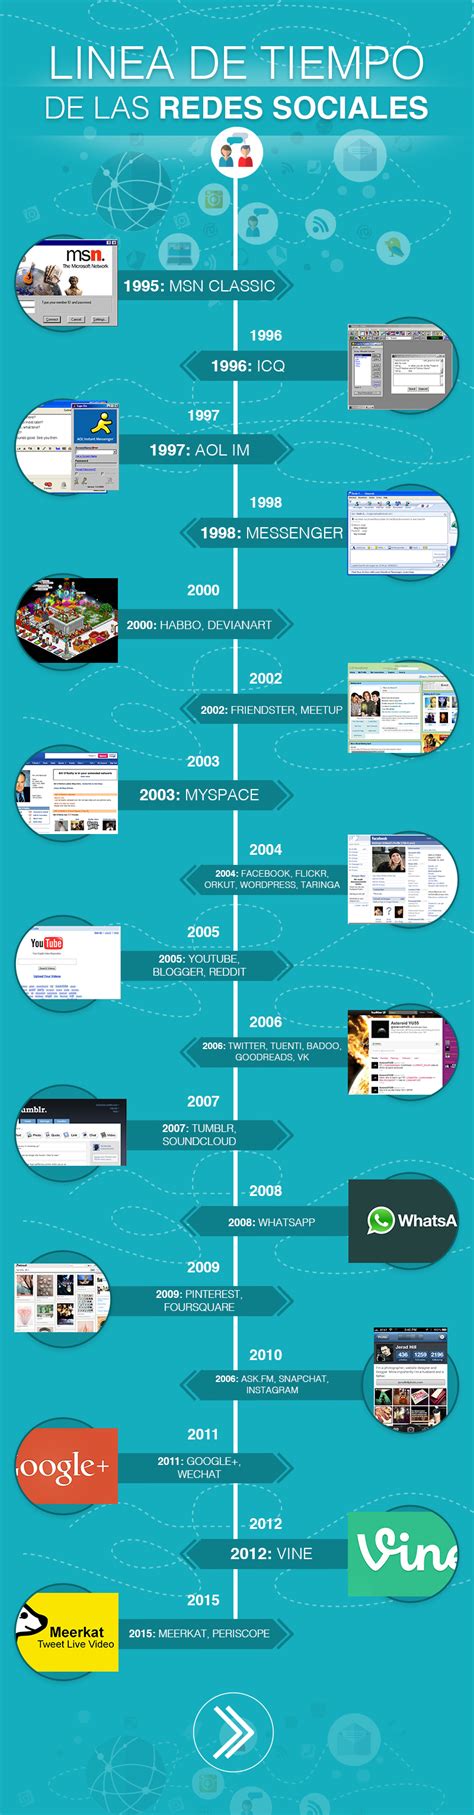 Timeline De Las Redes Sociales Infografia Infographic Socialmedia